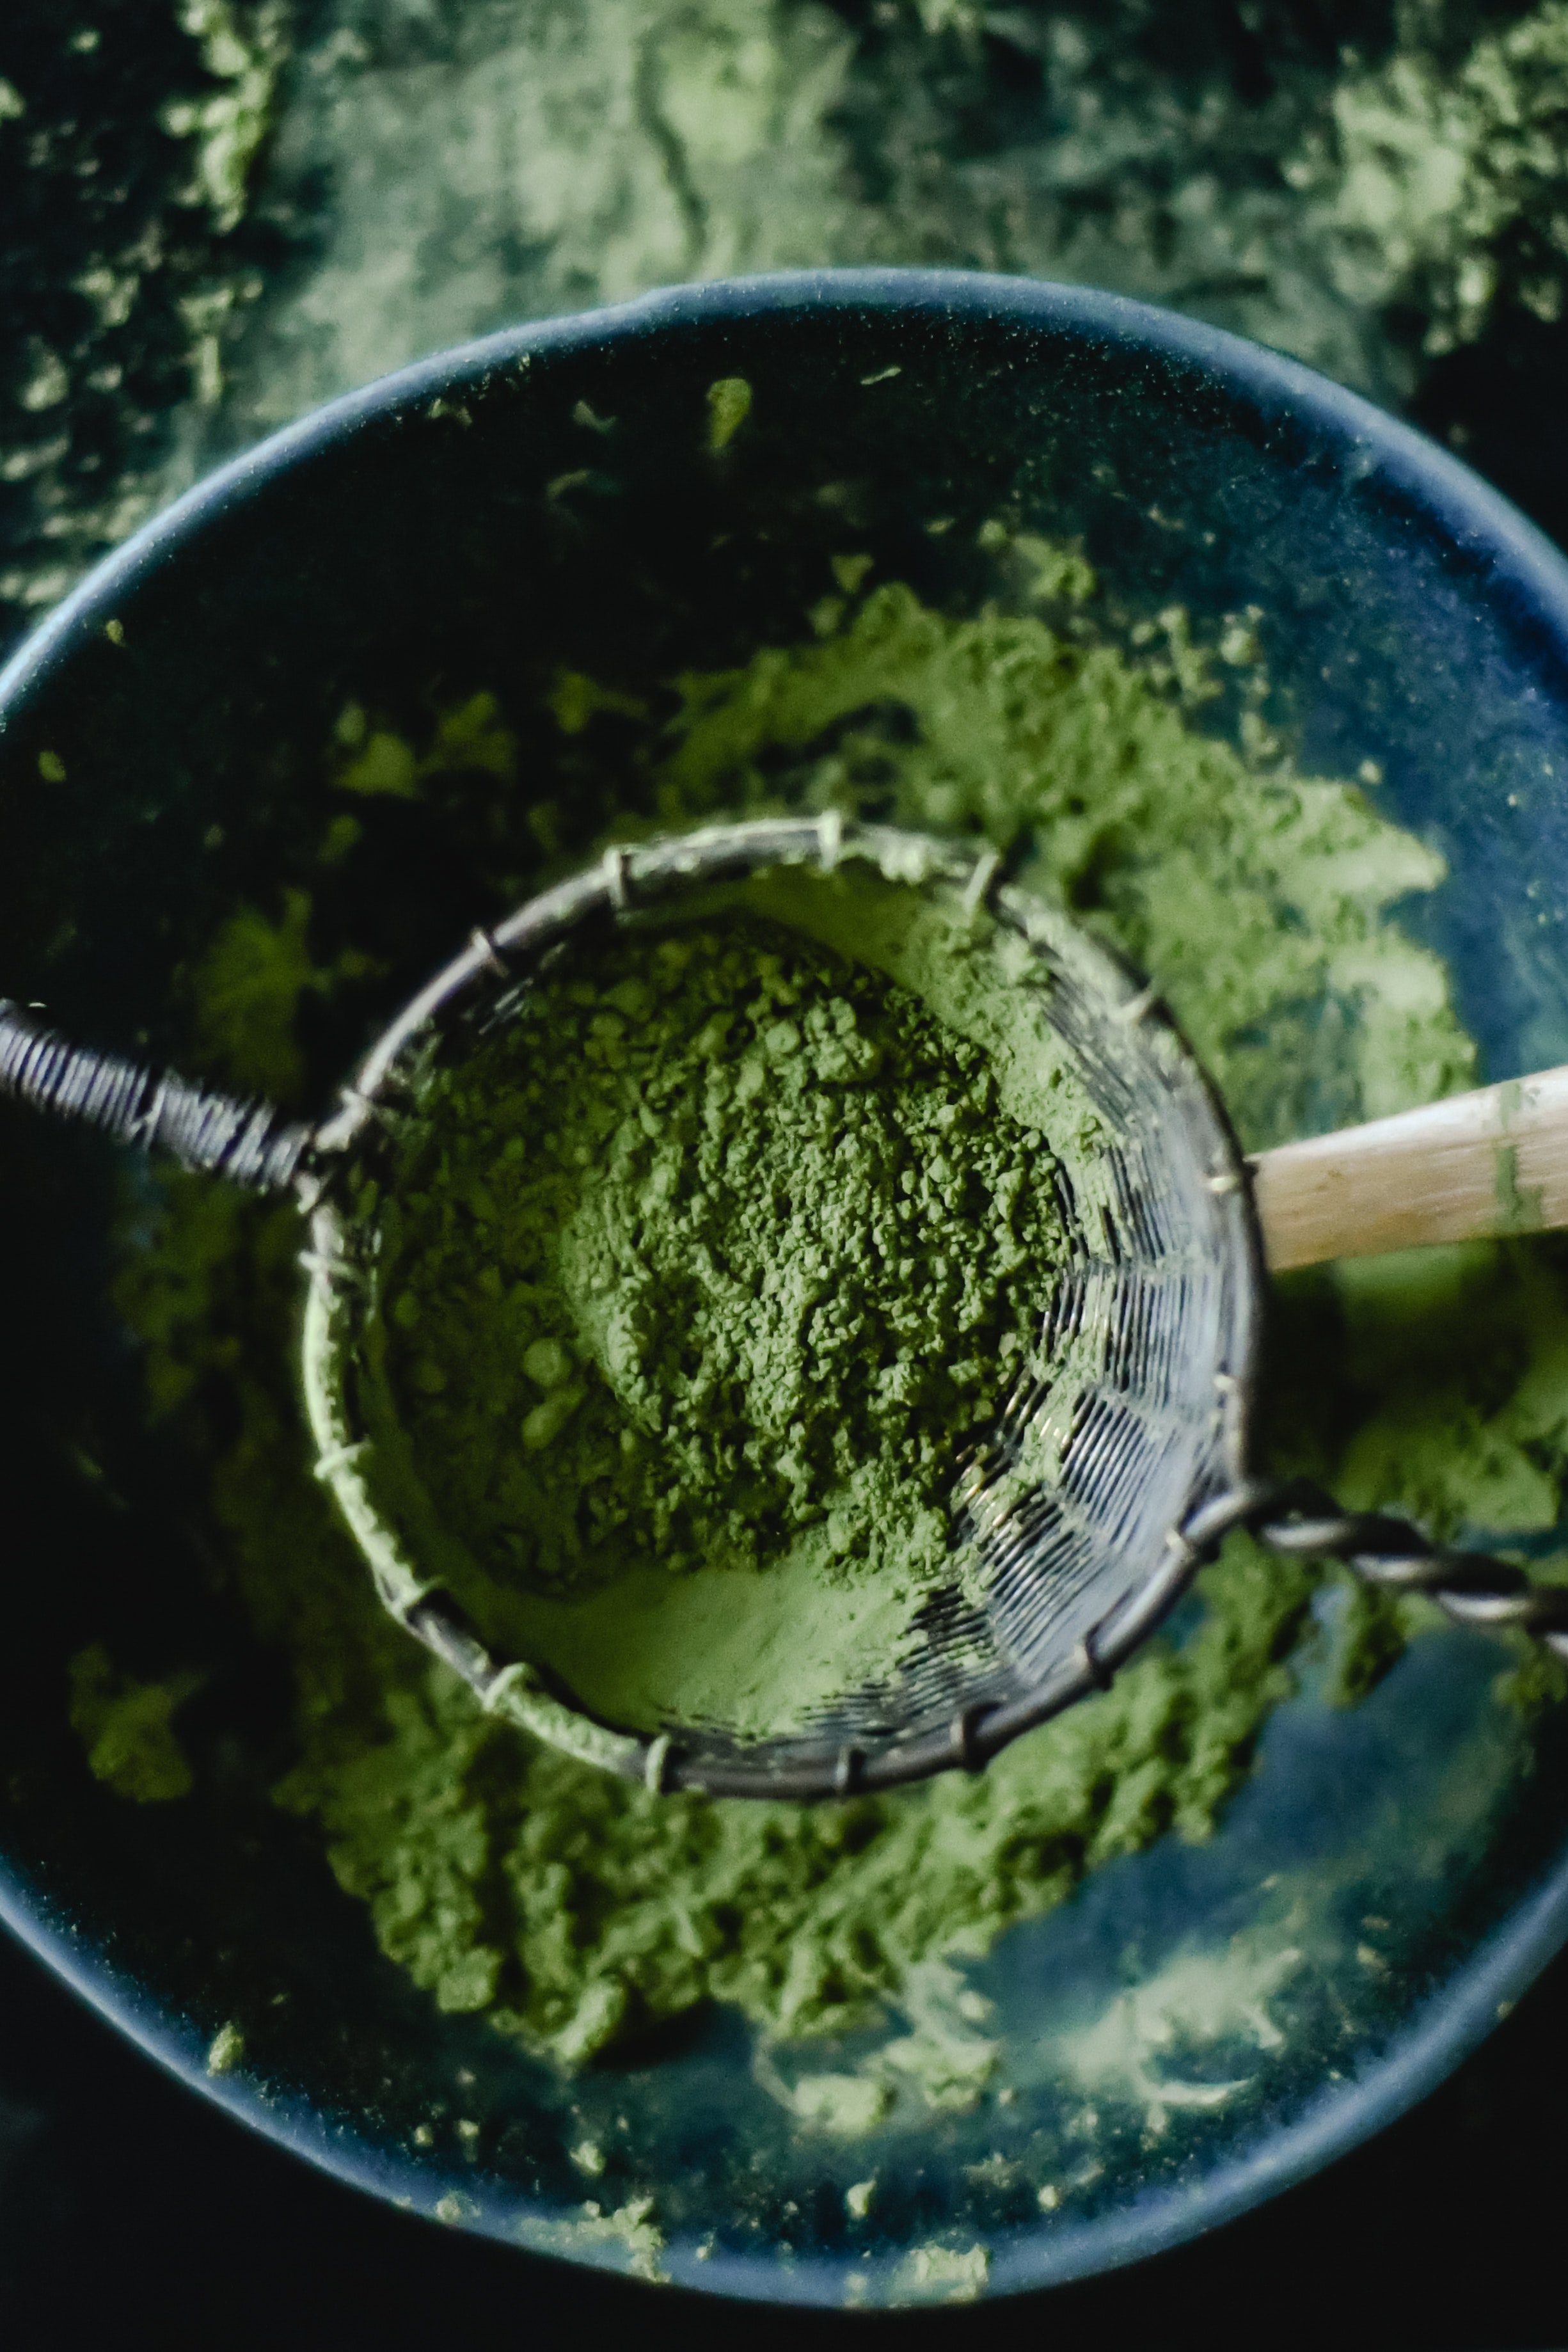 matcha powder, green tea, chlorophyll, sifter